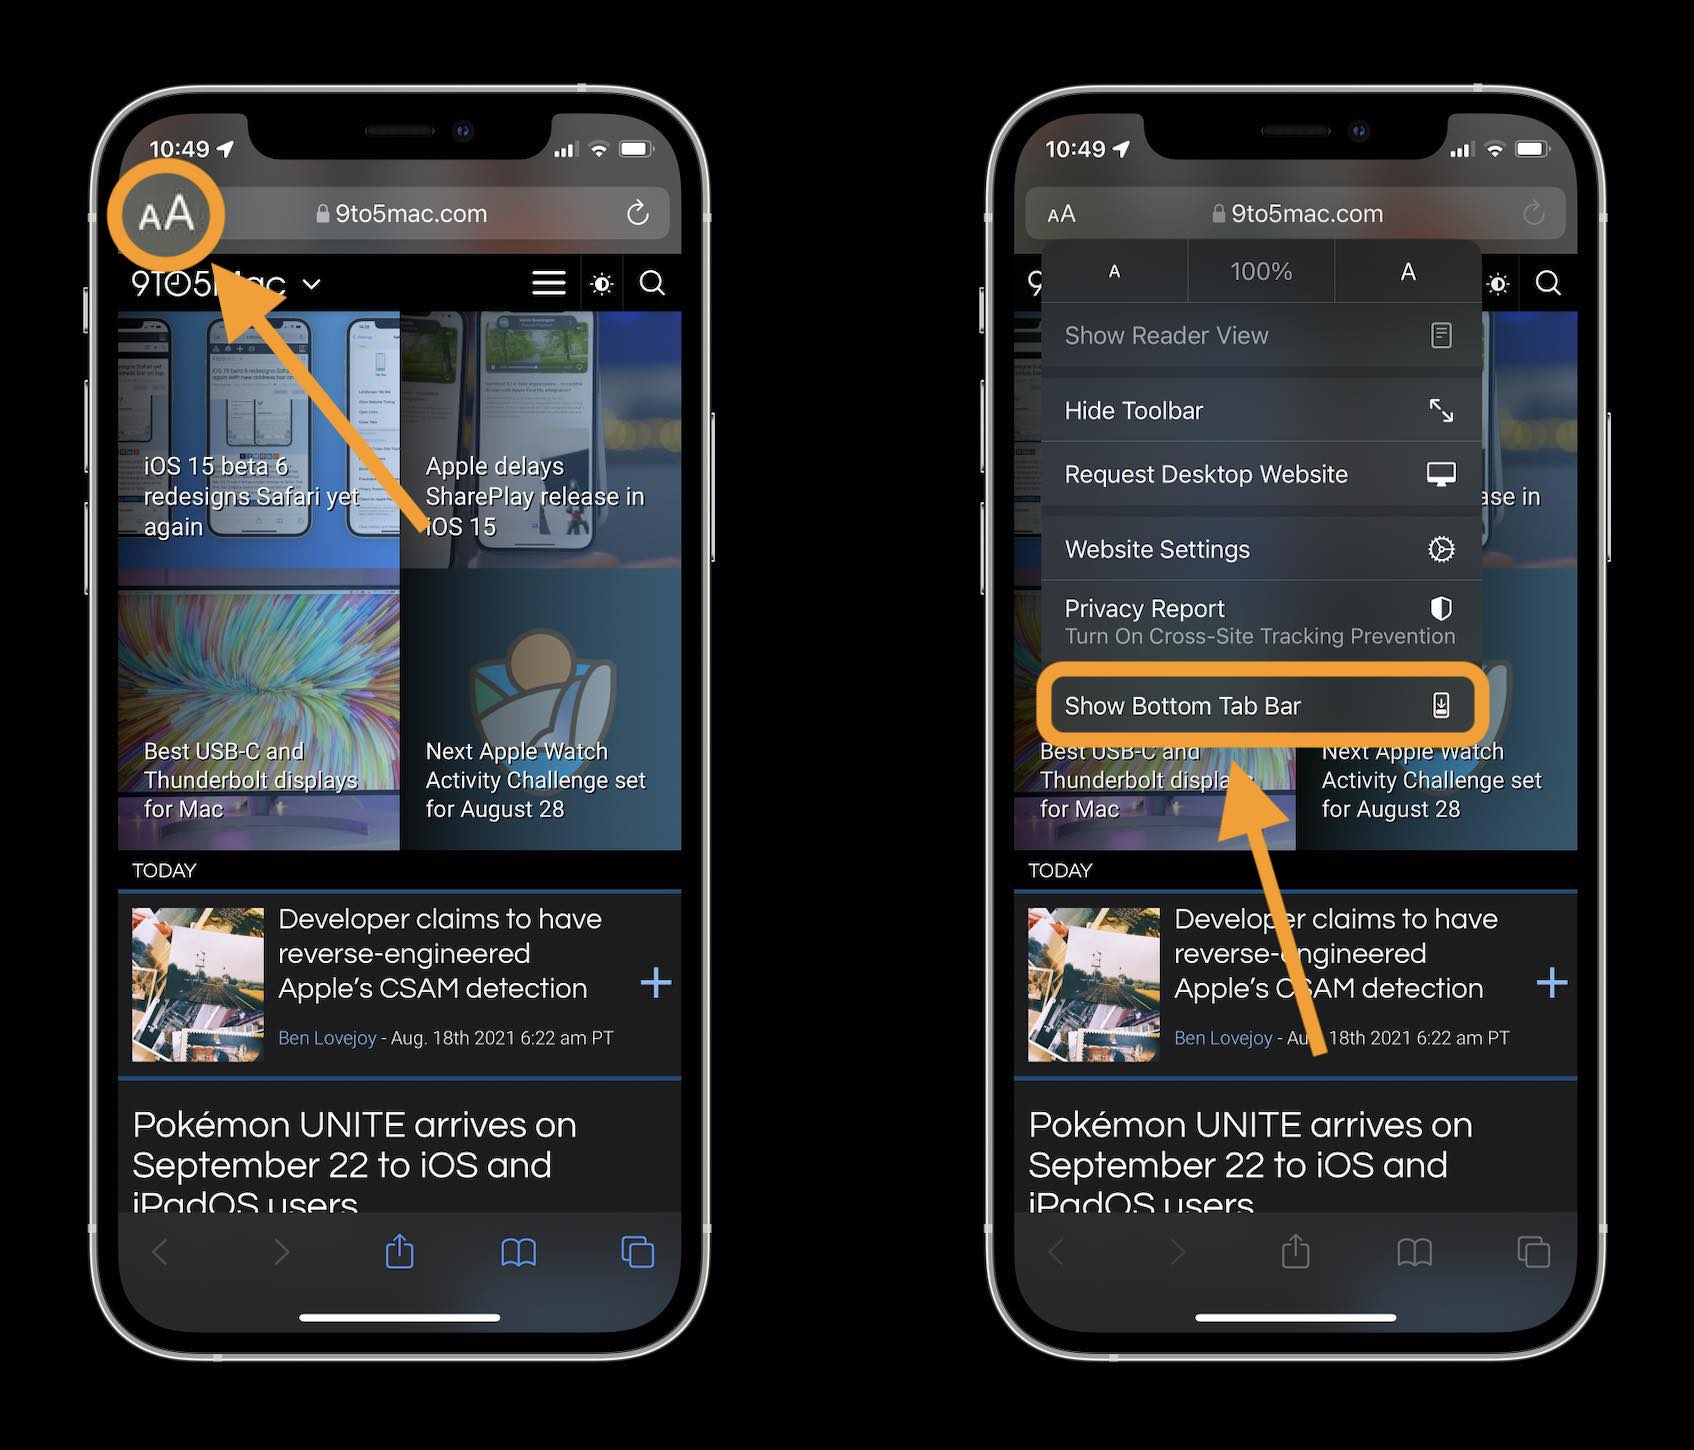 How to change iOS 15 Safari address/search bar on iPhone walkthrough 2- tap aA icon in top left corner in the address/search bar and tap Show Bottom Tab Bar